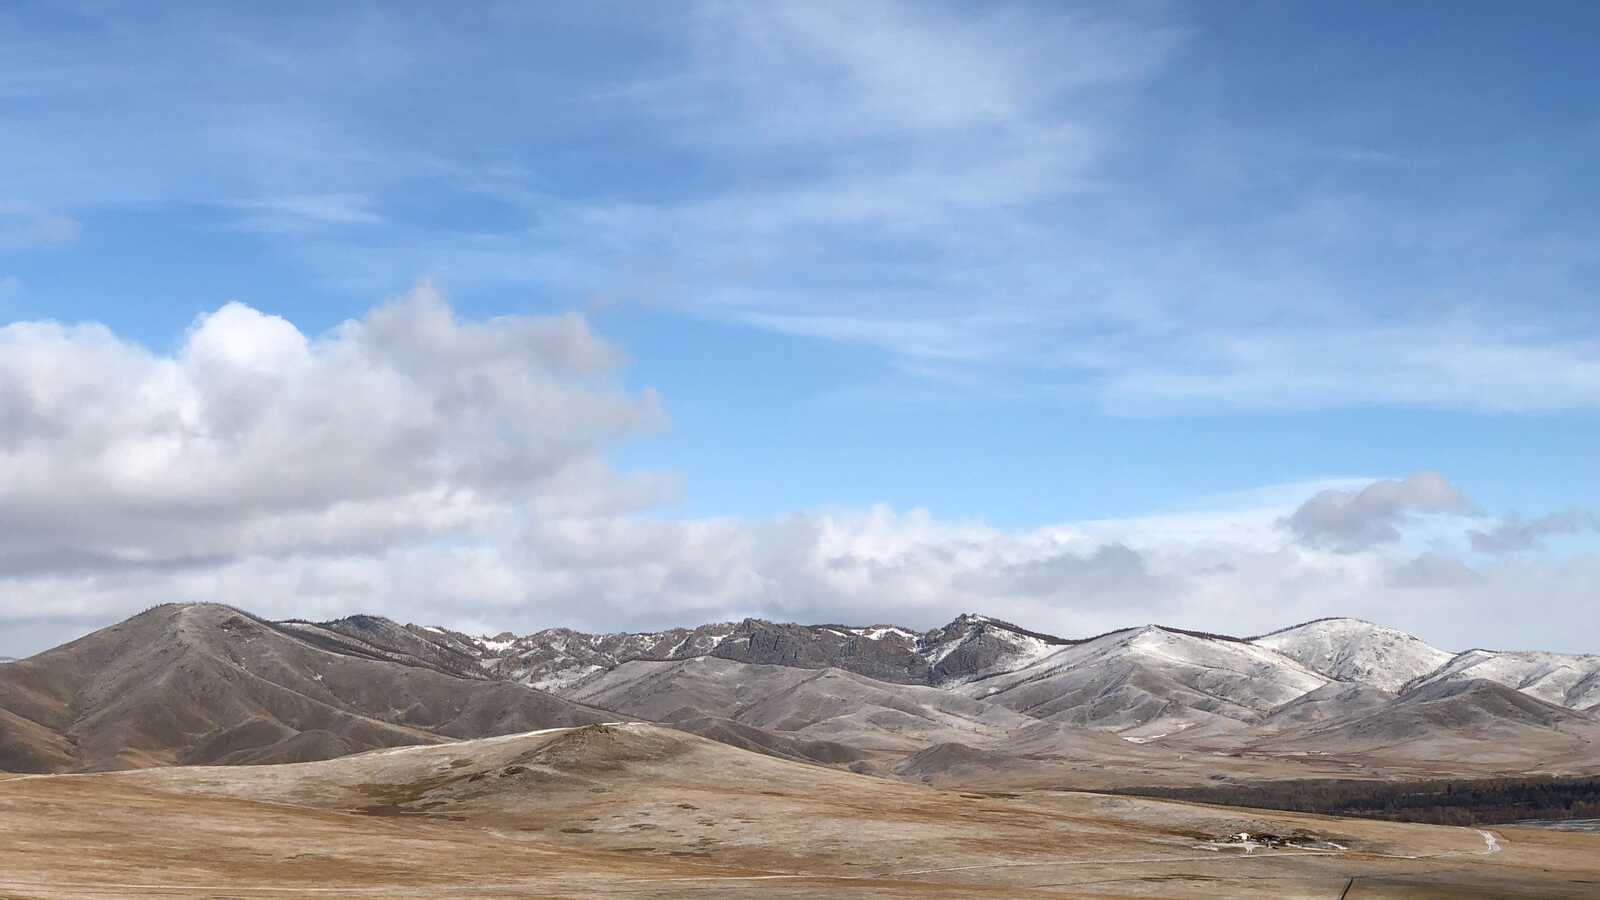 Mongolia landscape